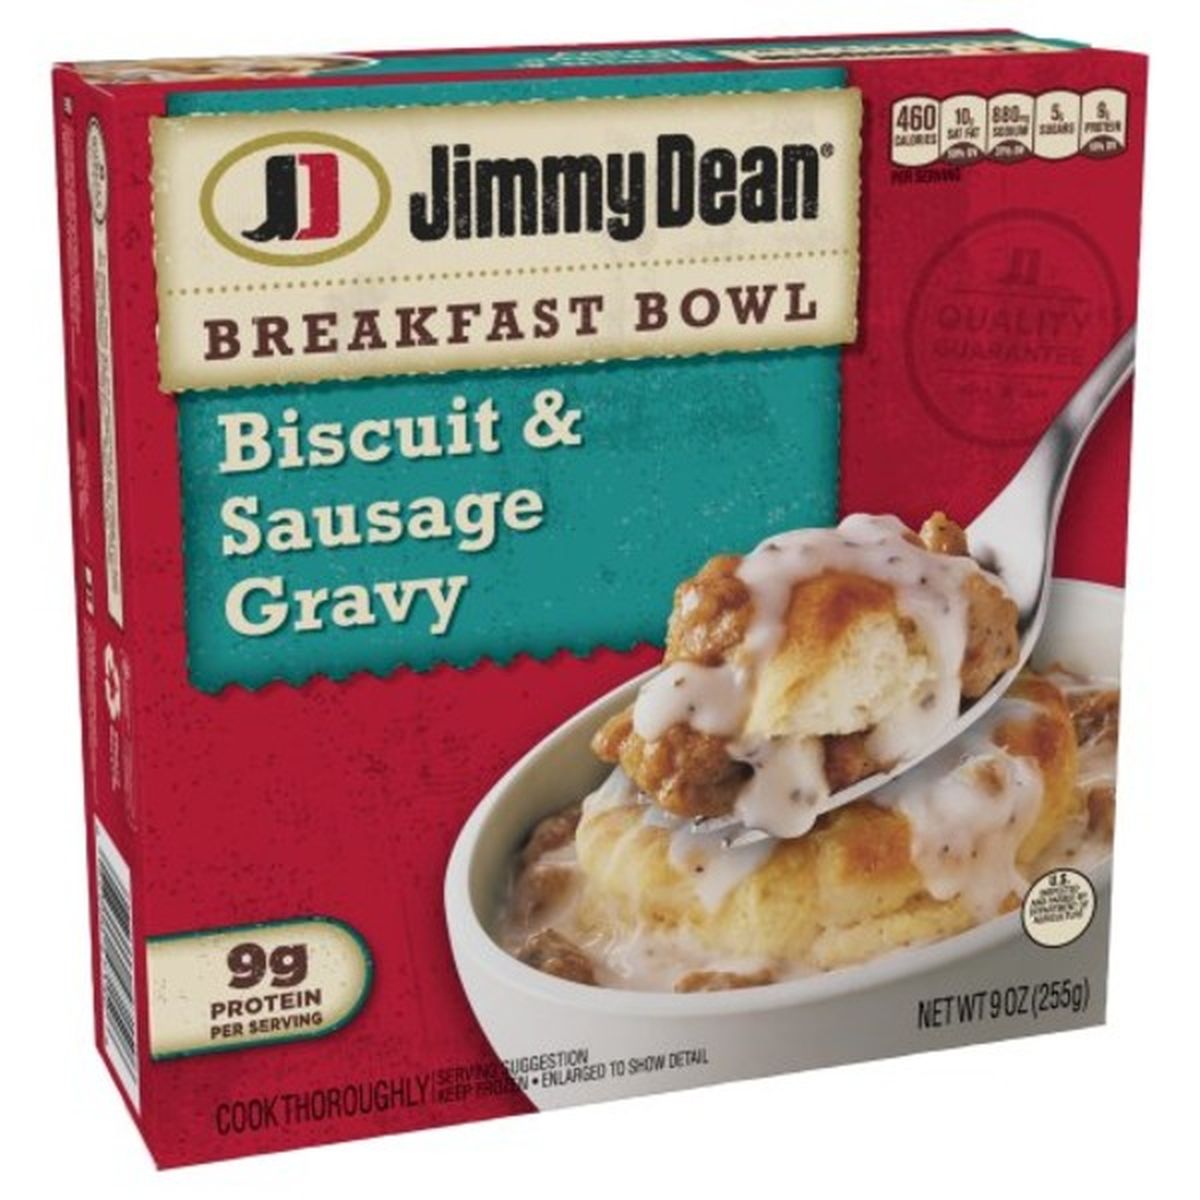 Calories in Jimmy Dean Biscuit & Sausage Gravy Breakfast Bowl